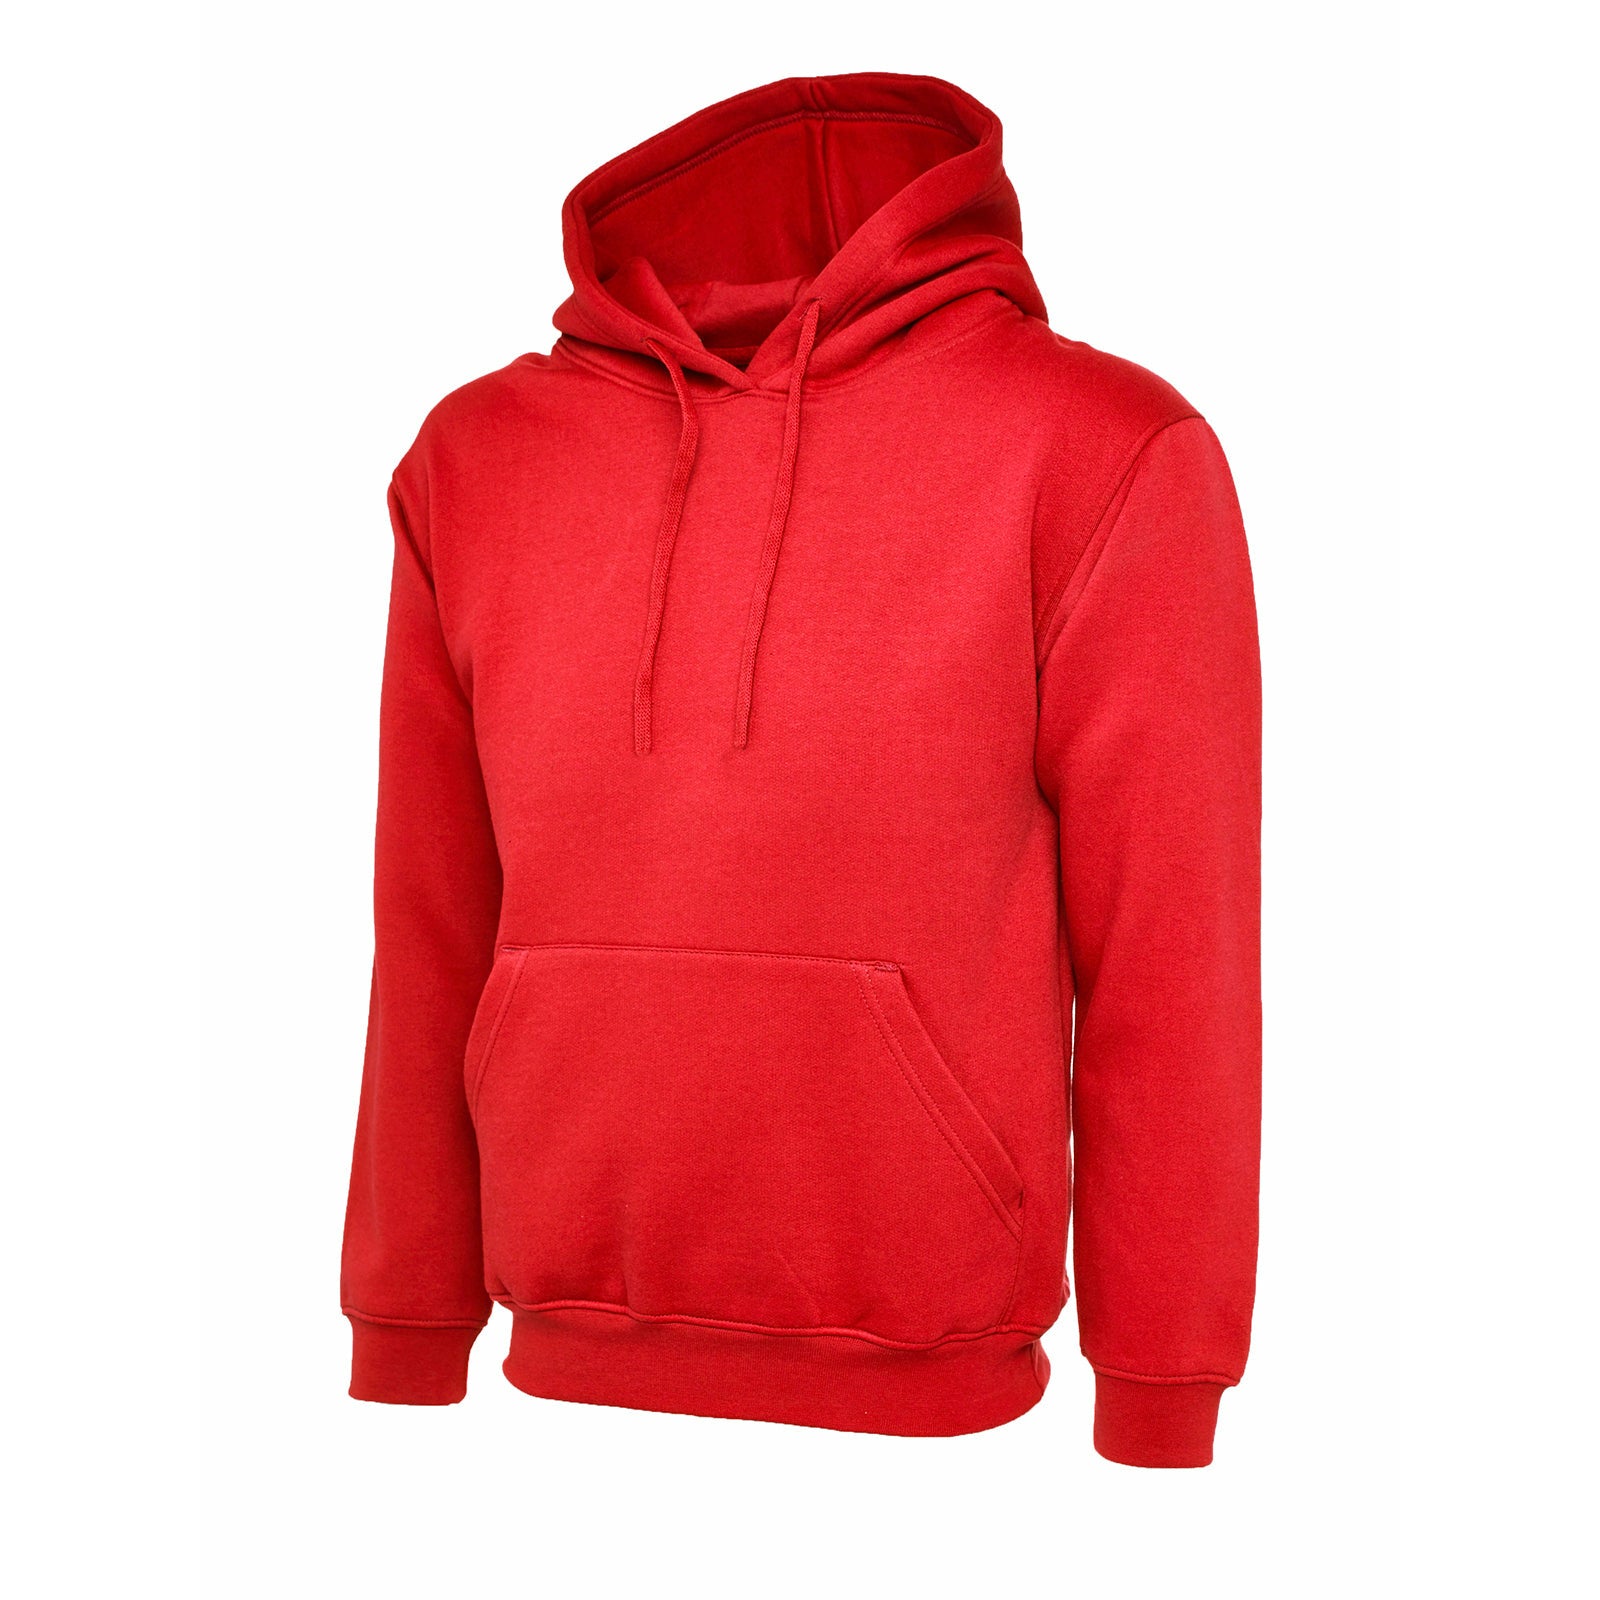 Olympic Hooded Sweatshirt Red